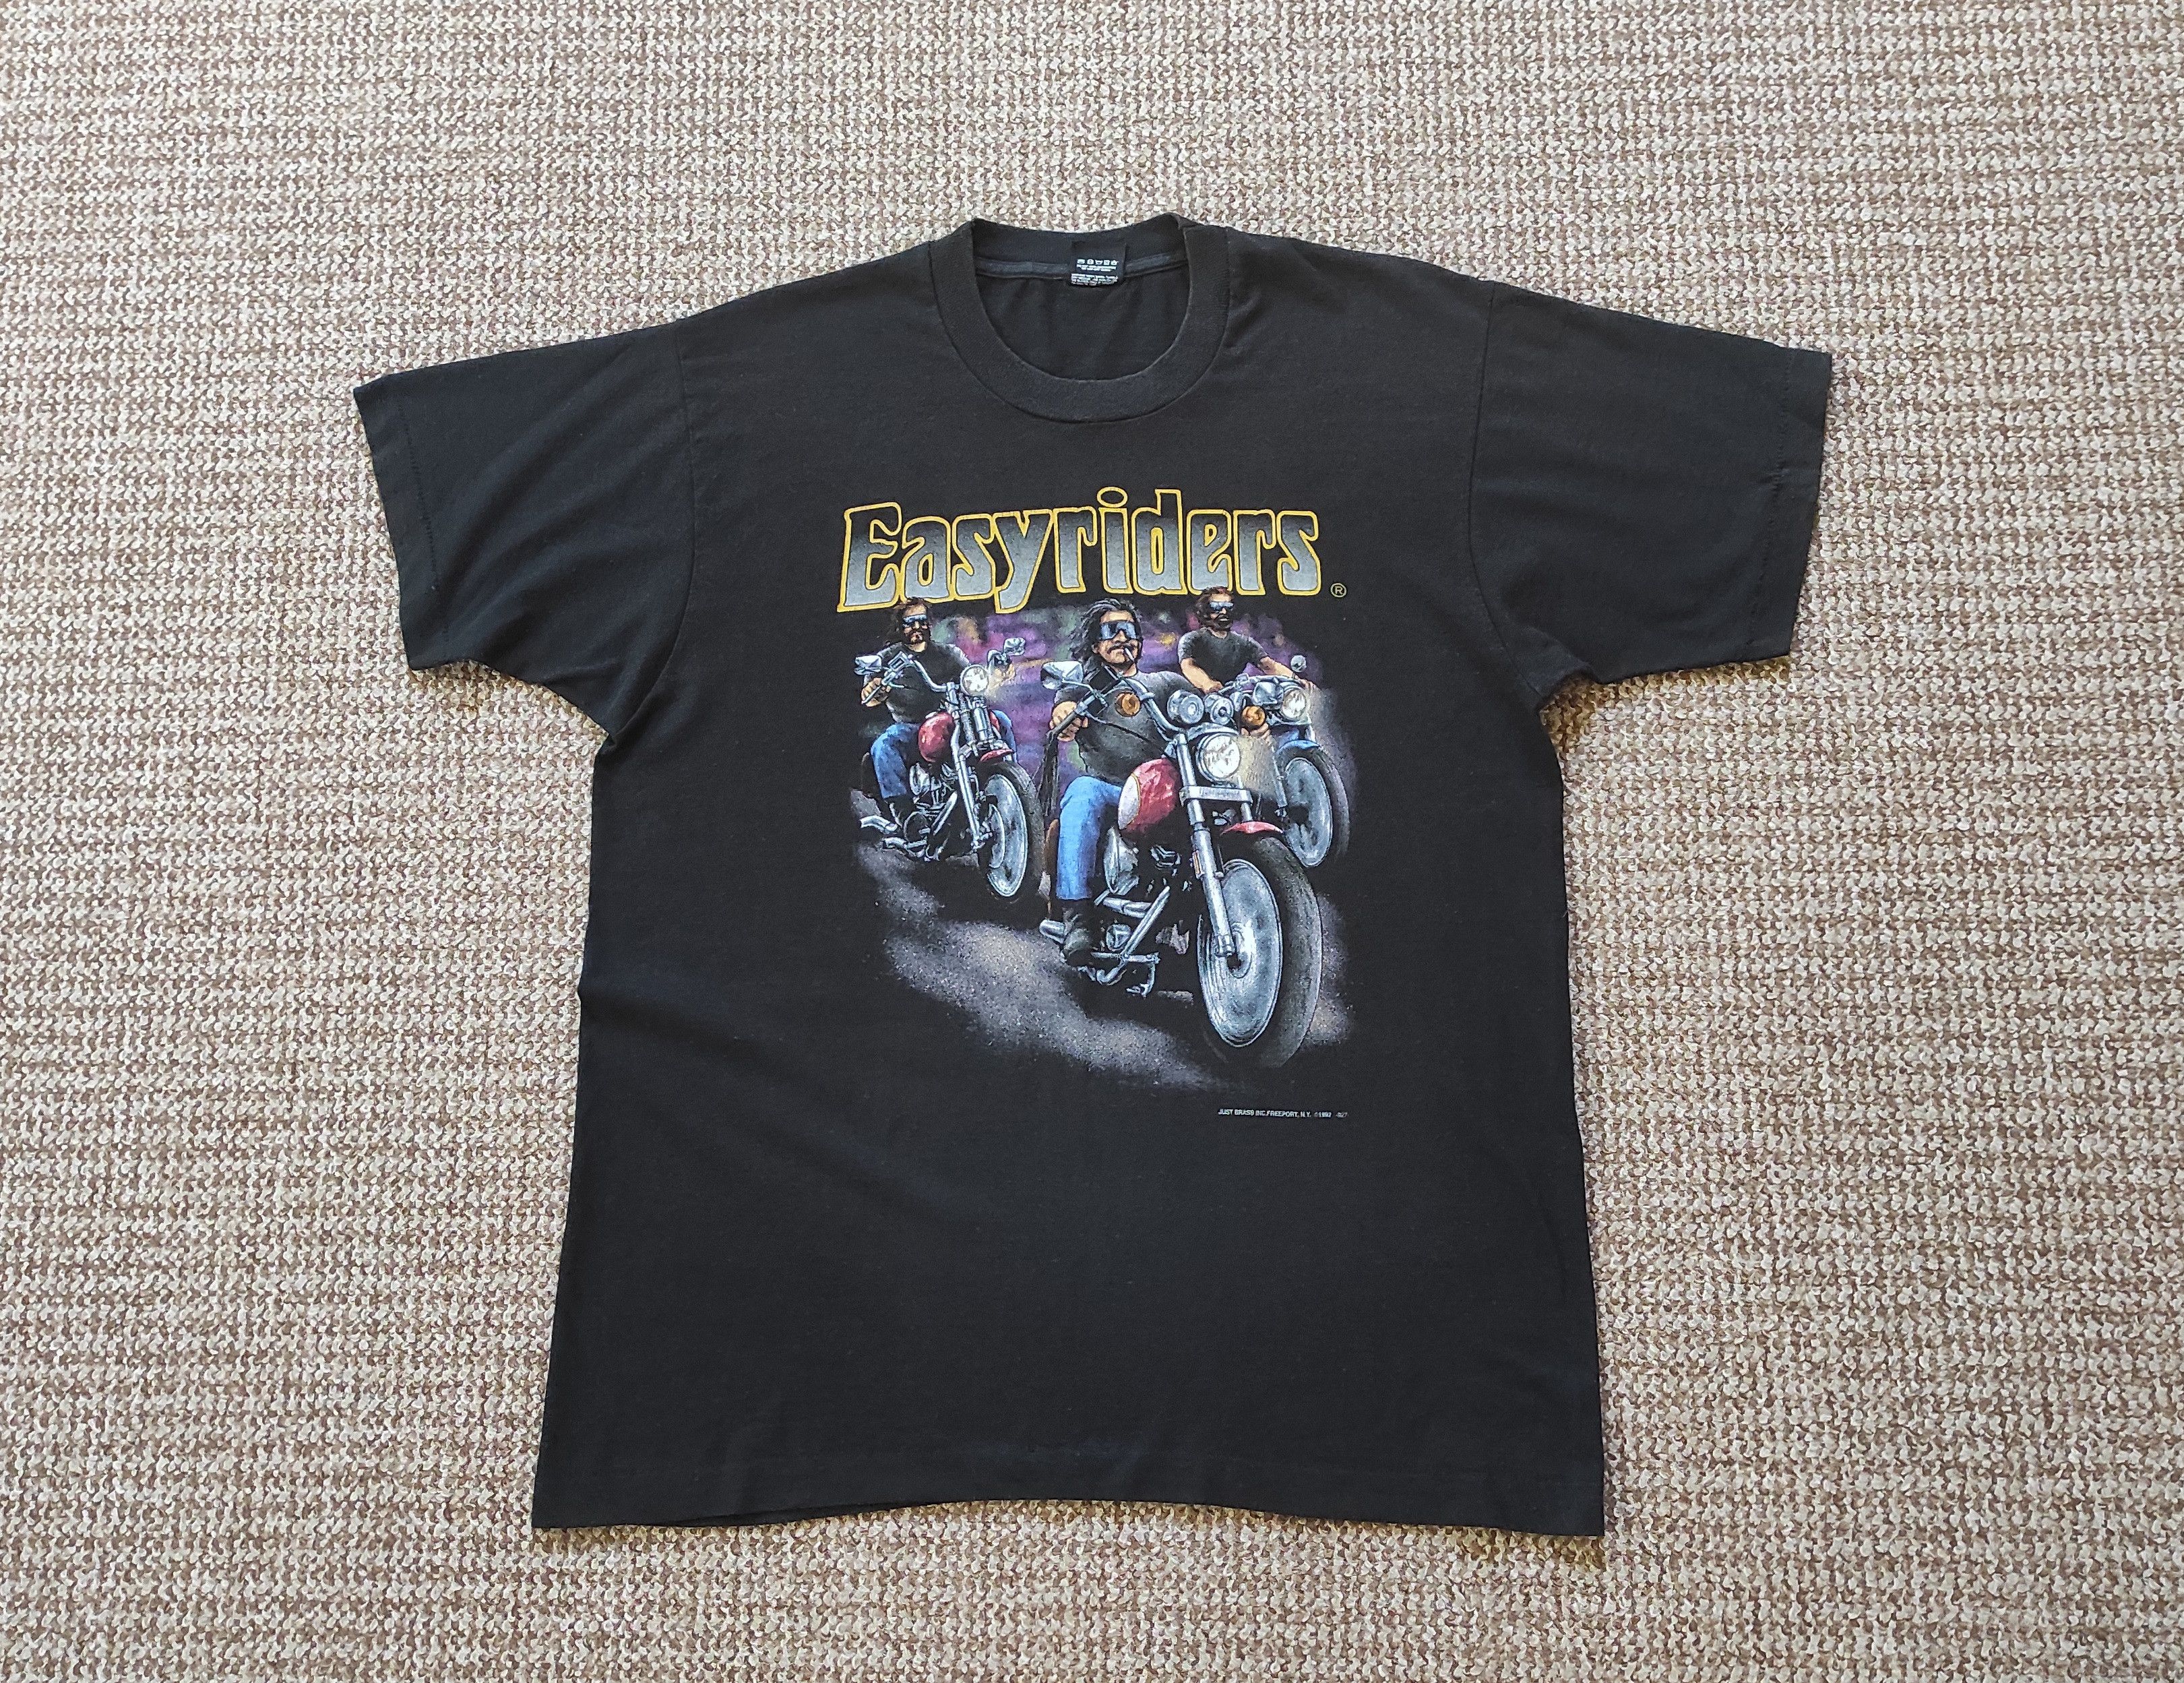 t-shirt easyeiders just brass inc freeport N.Y 1992